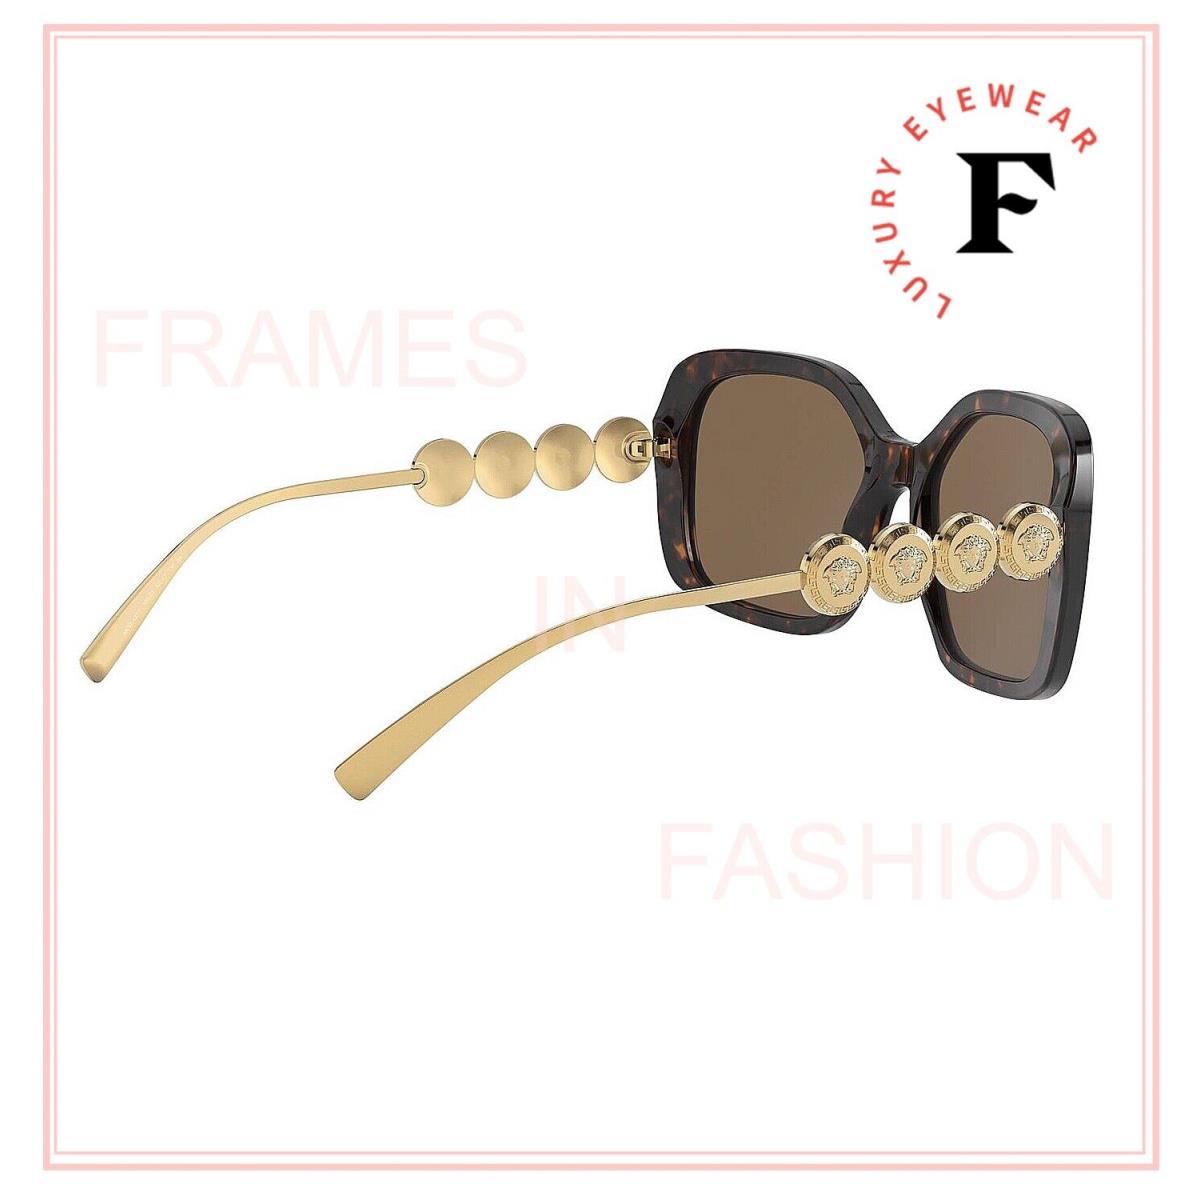 Versace sunglasses  - 1002/13 , Gold Frame, Brown Lens